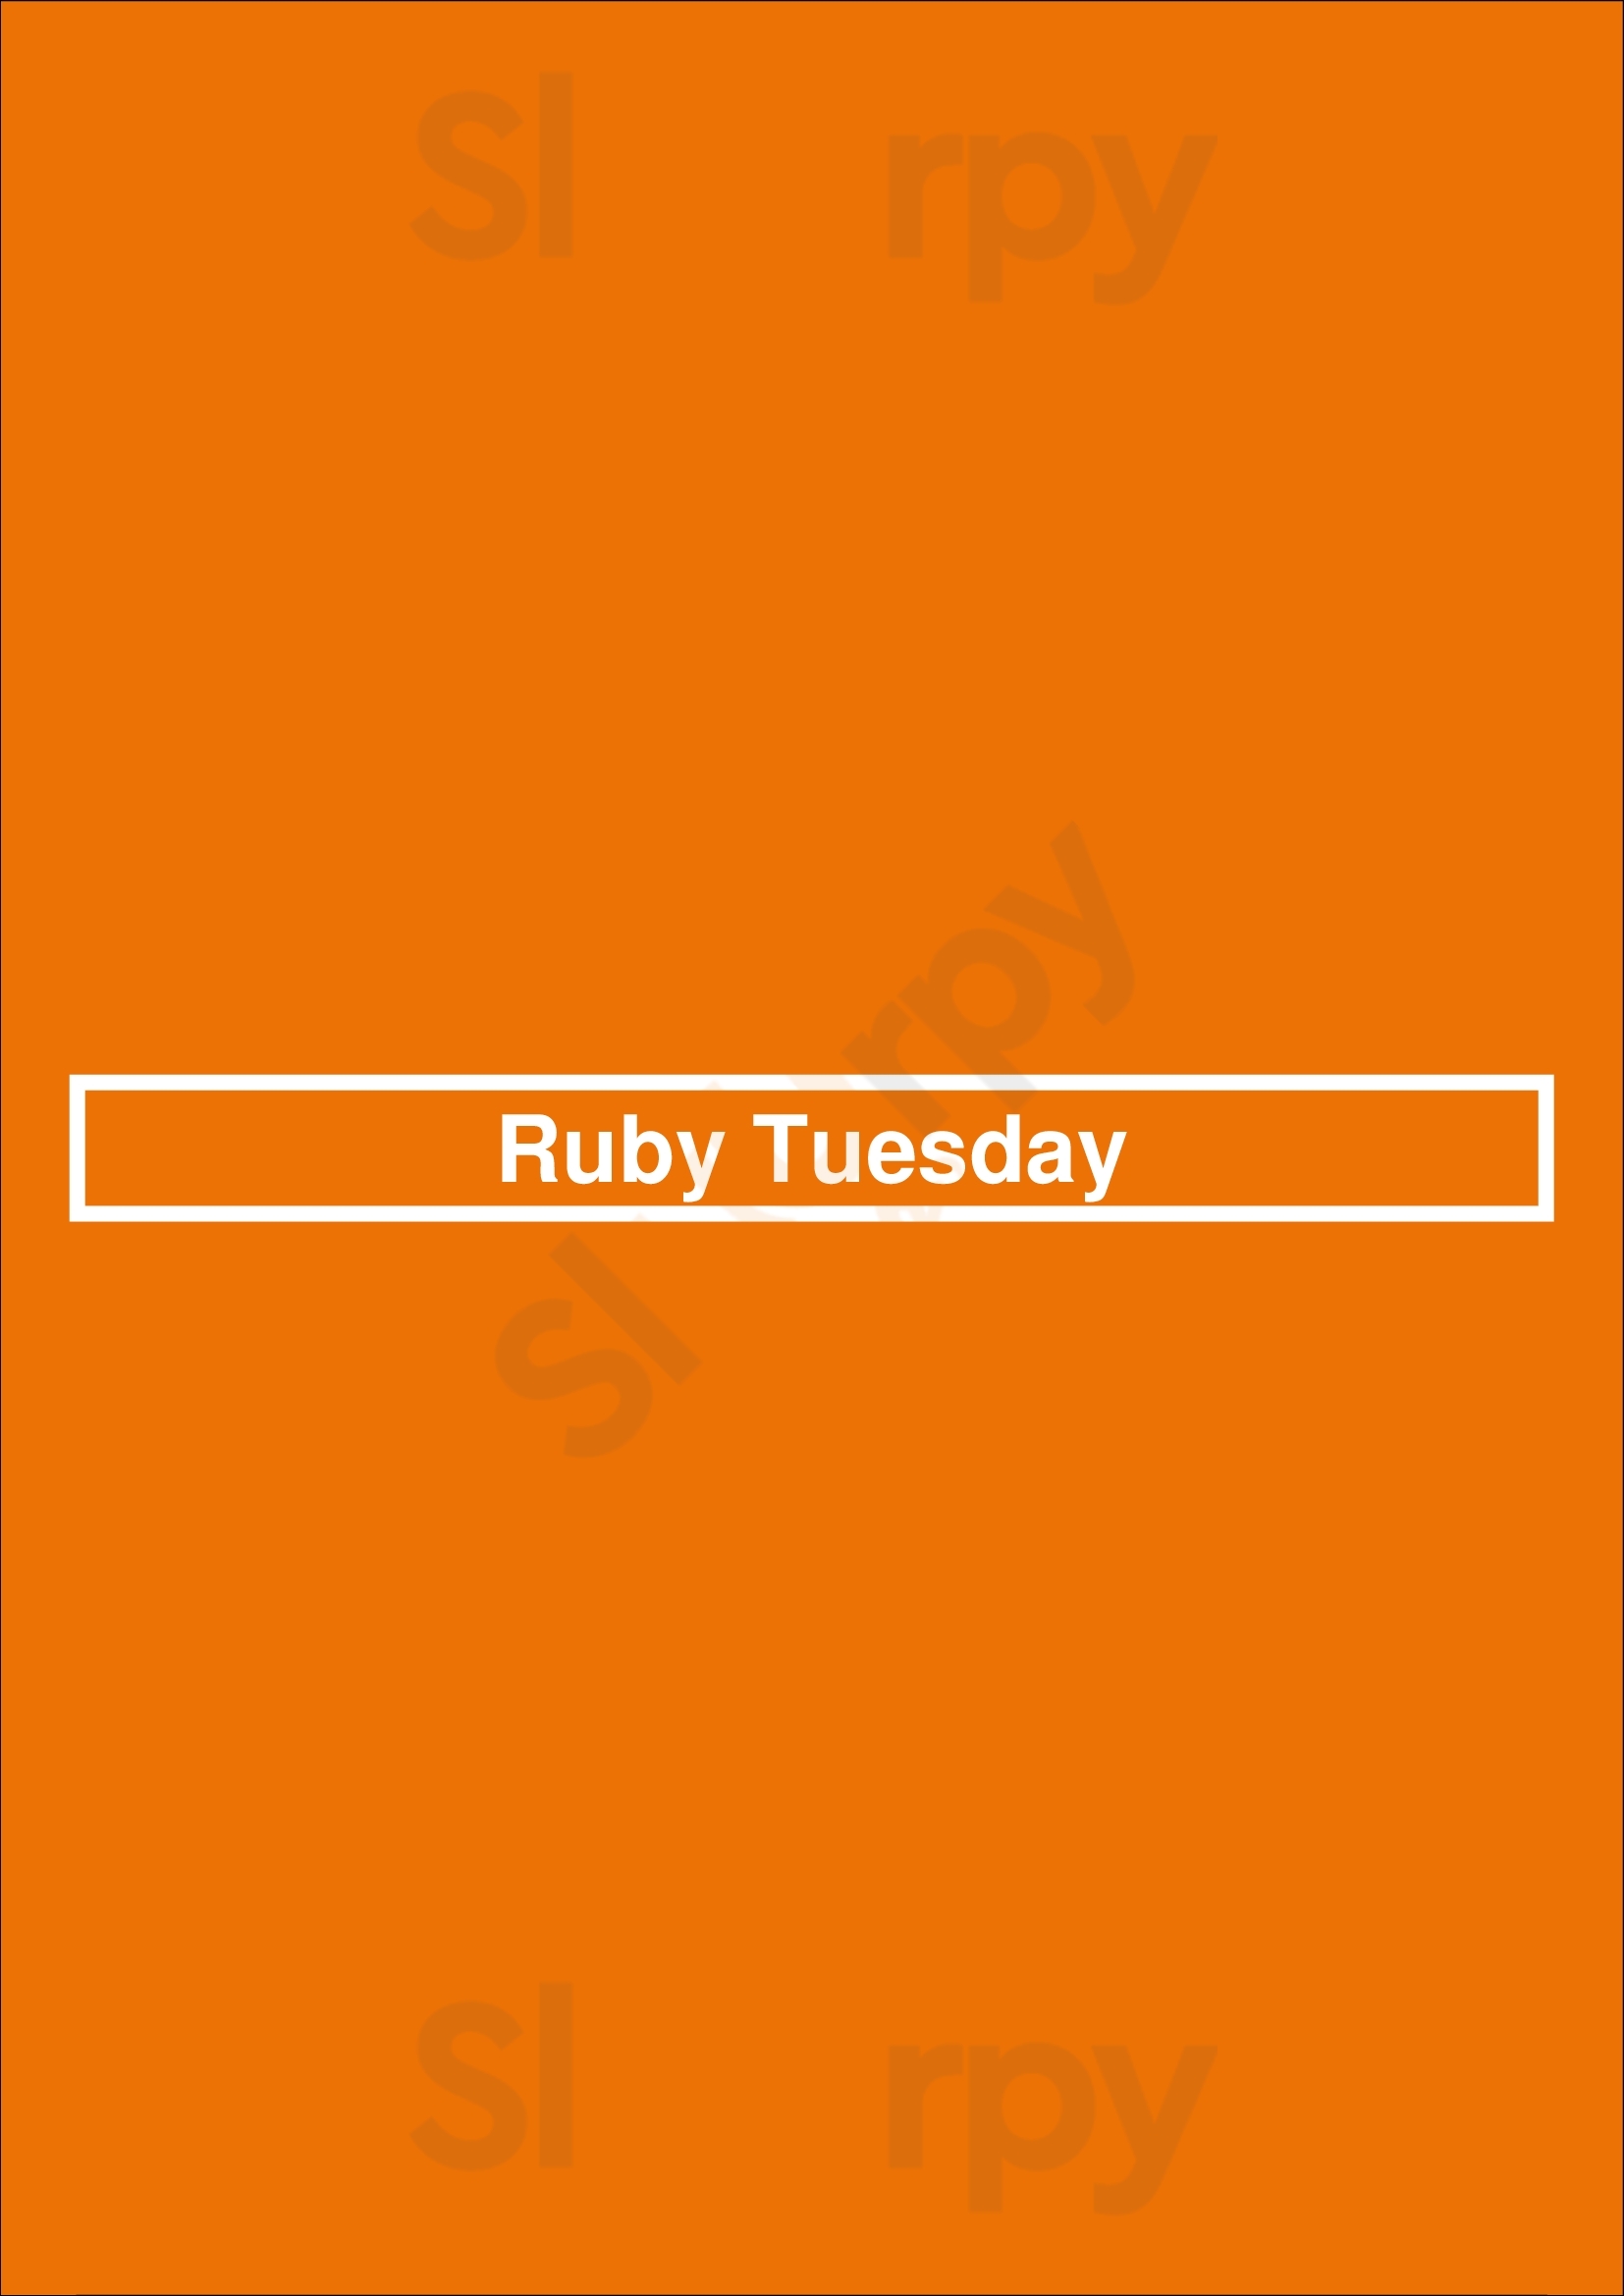 Ruby Tuesday Vero Beach Menu - 1